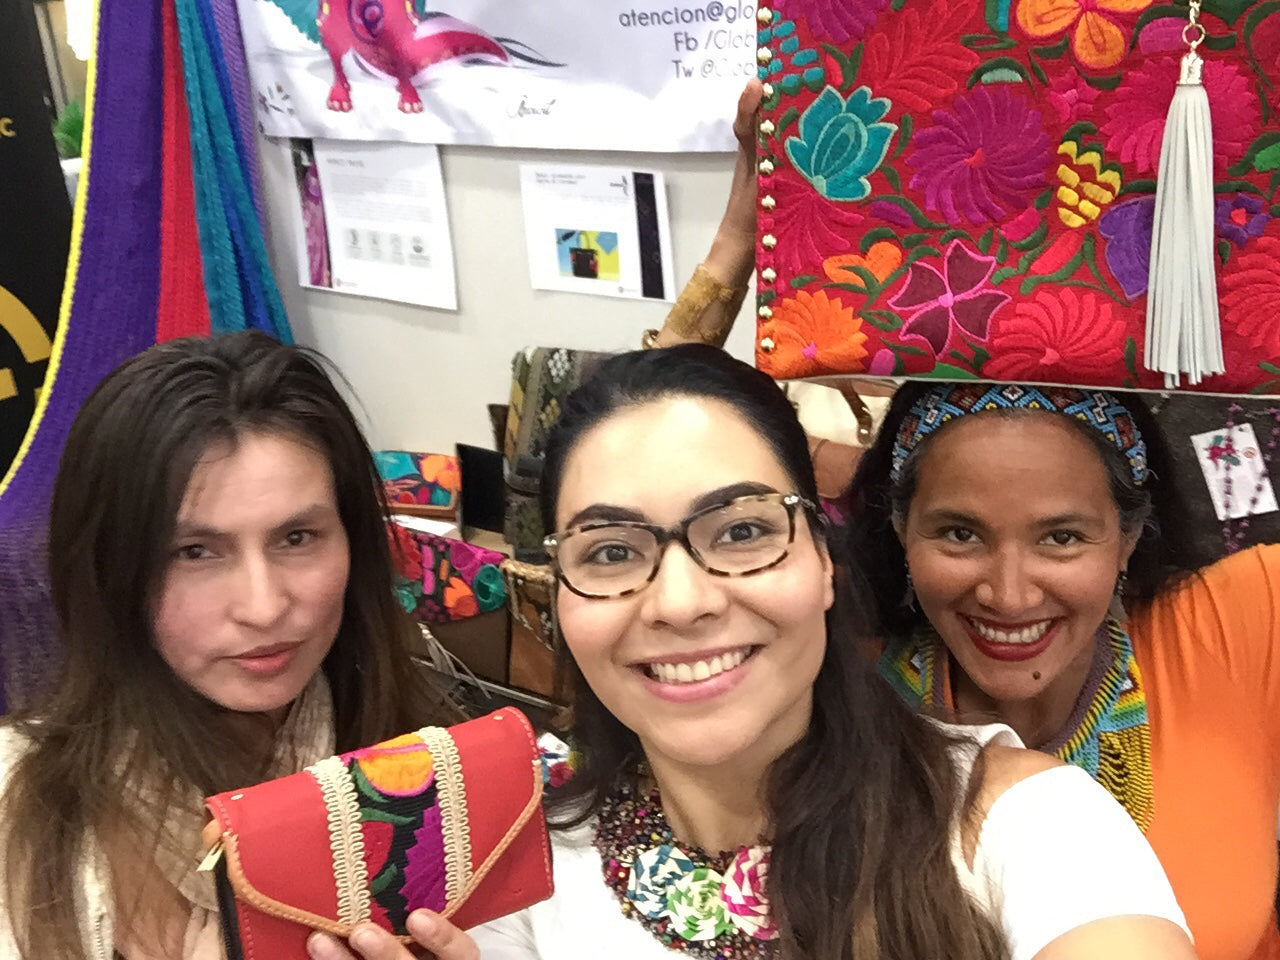 Bolsa de lujo, piel genuina y bordado artesanal maya